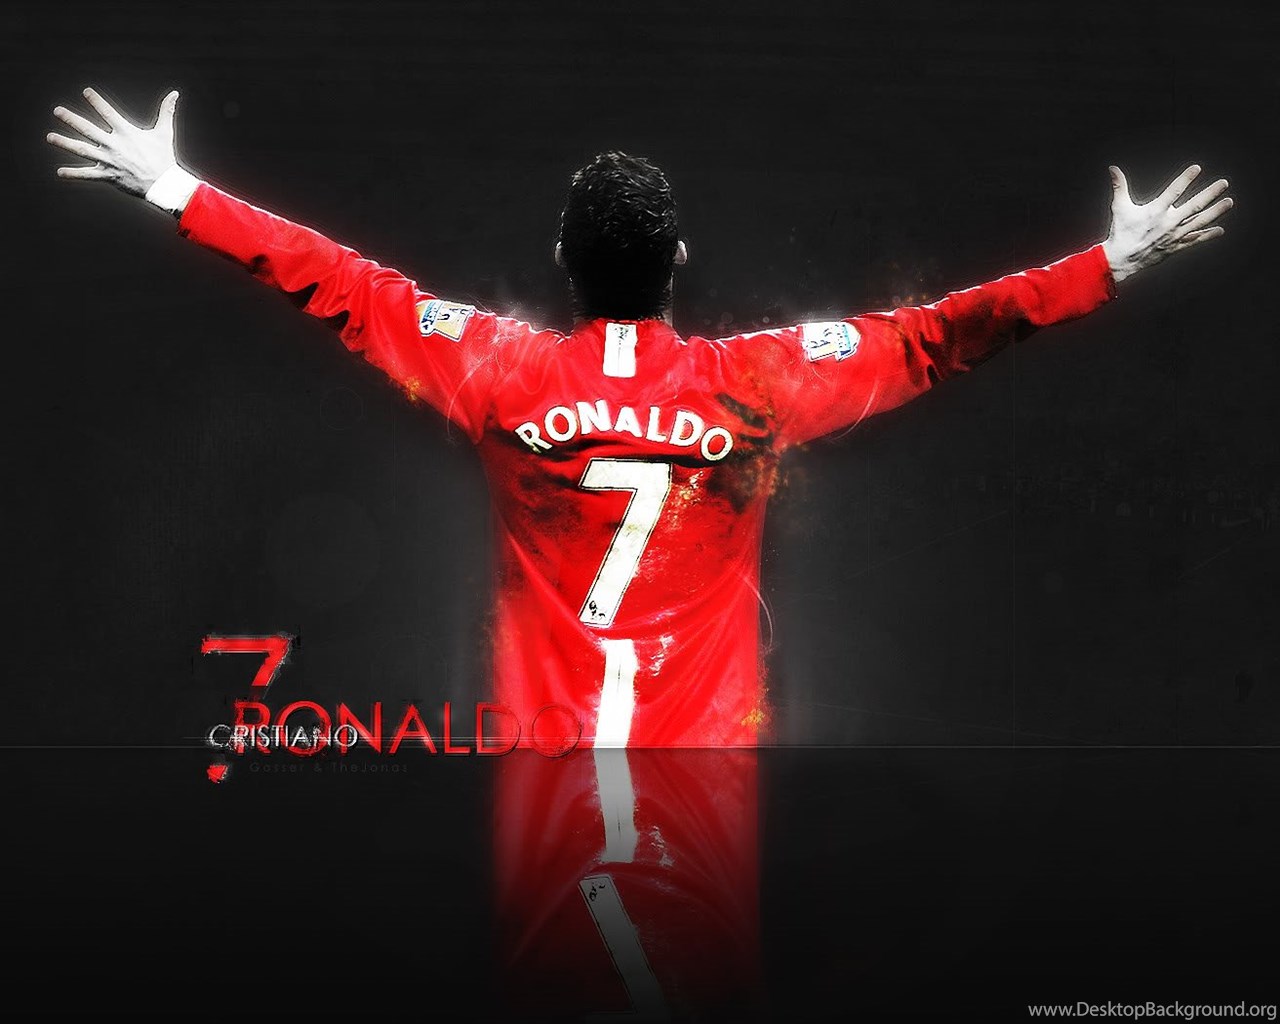 Ronaldo Celebrating Goal Number 7 Wallpaper Manchester United. Desktop Background